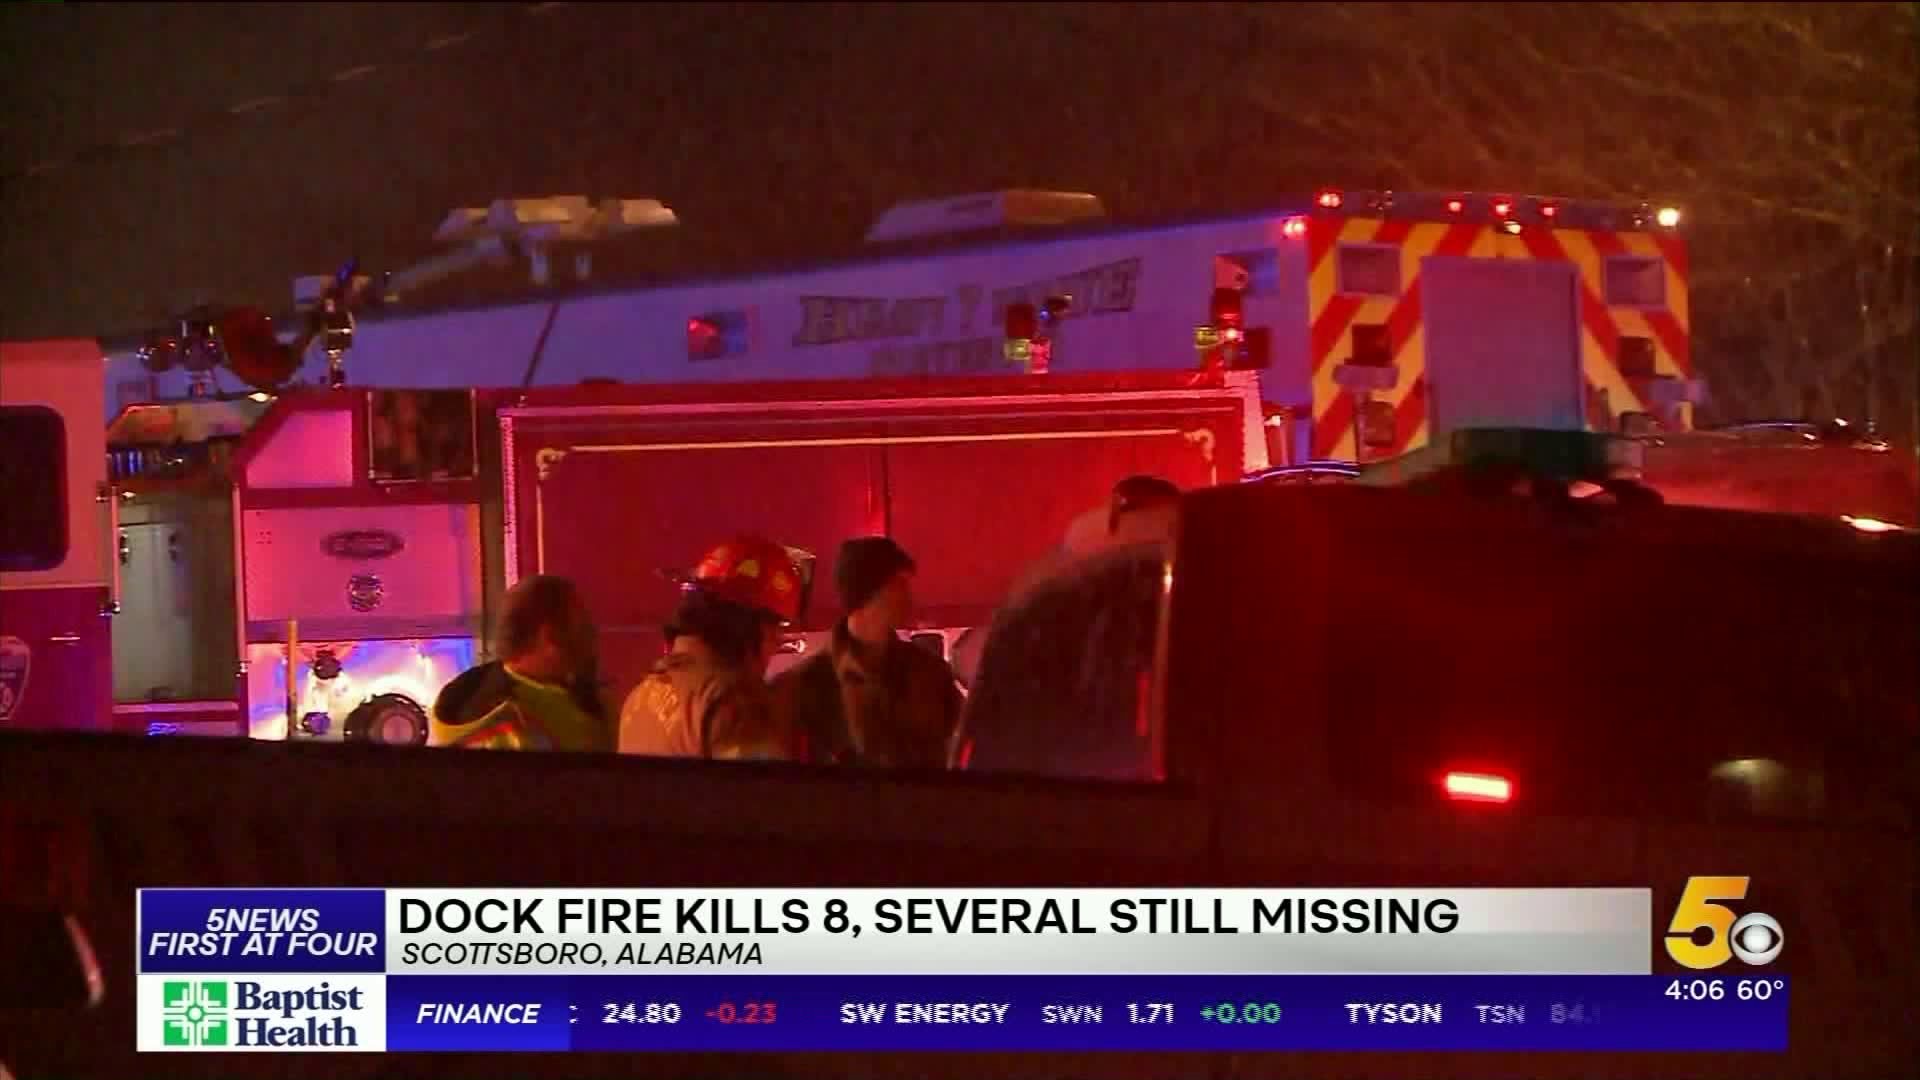 8 Confirmed Deaths In Alabama Dock Fire